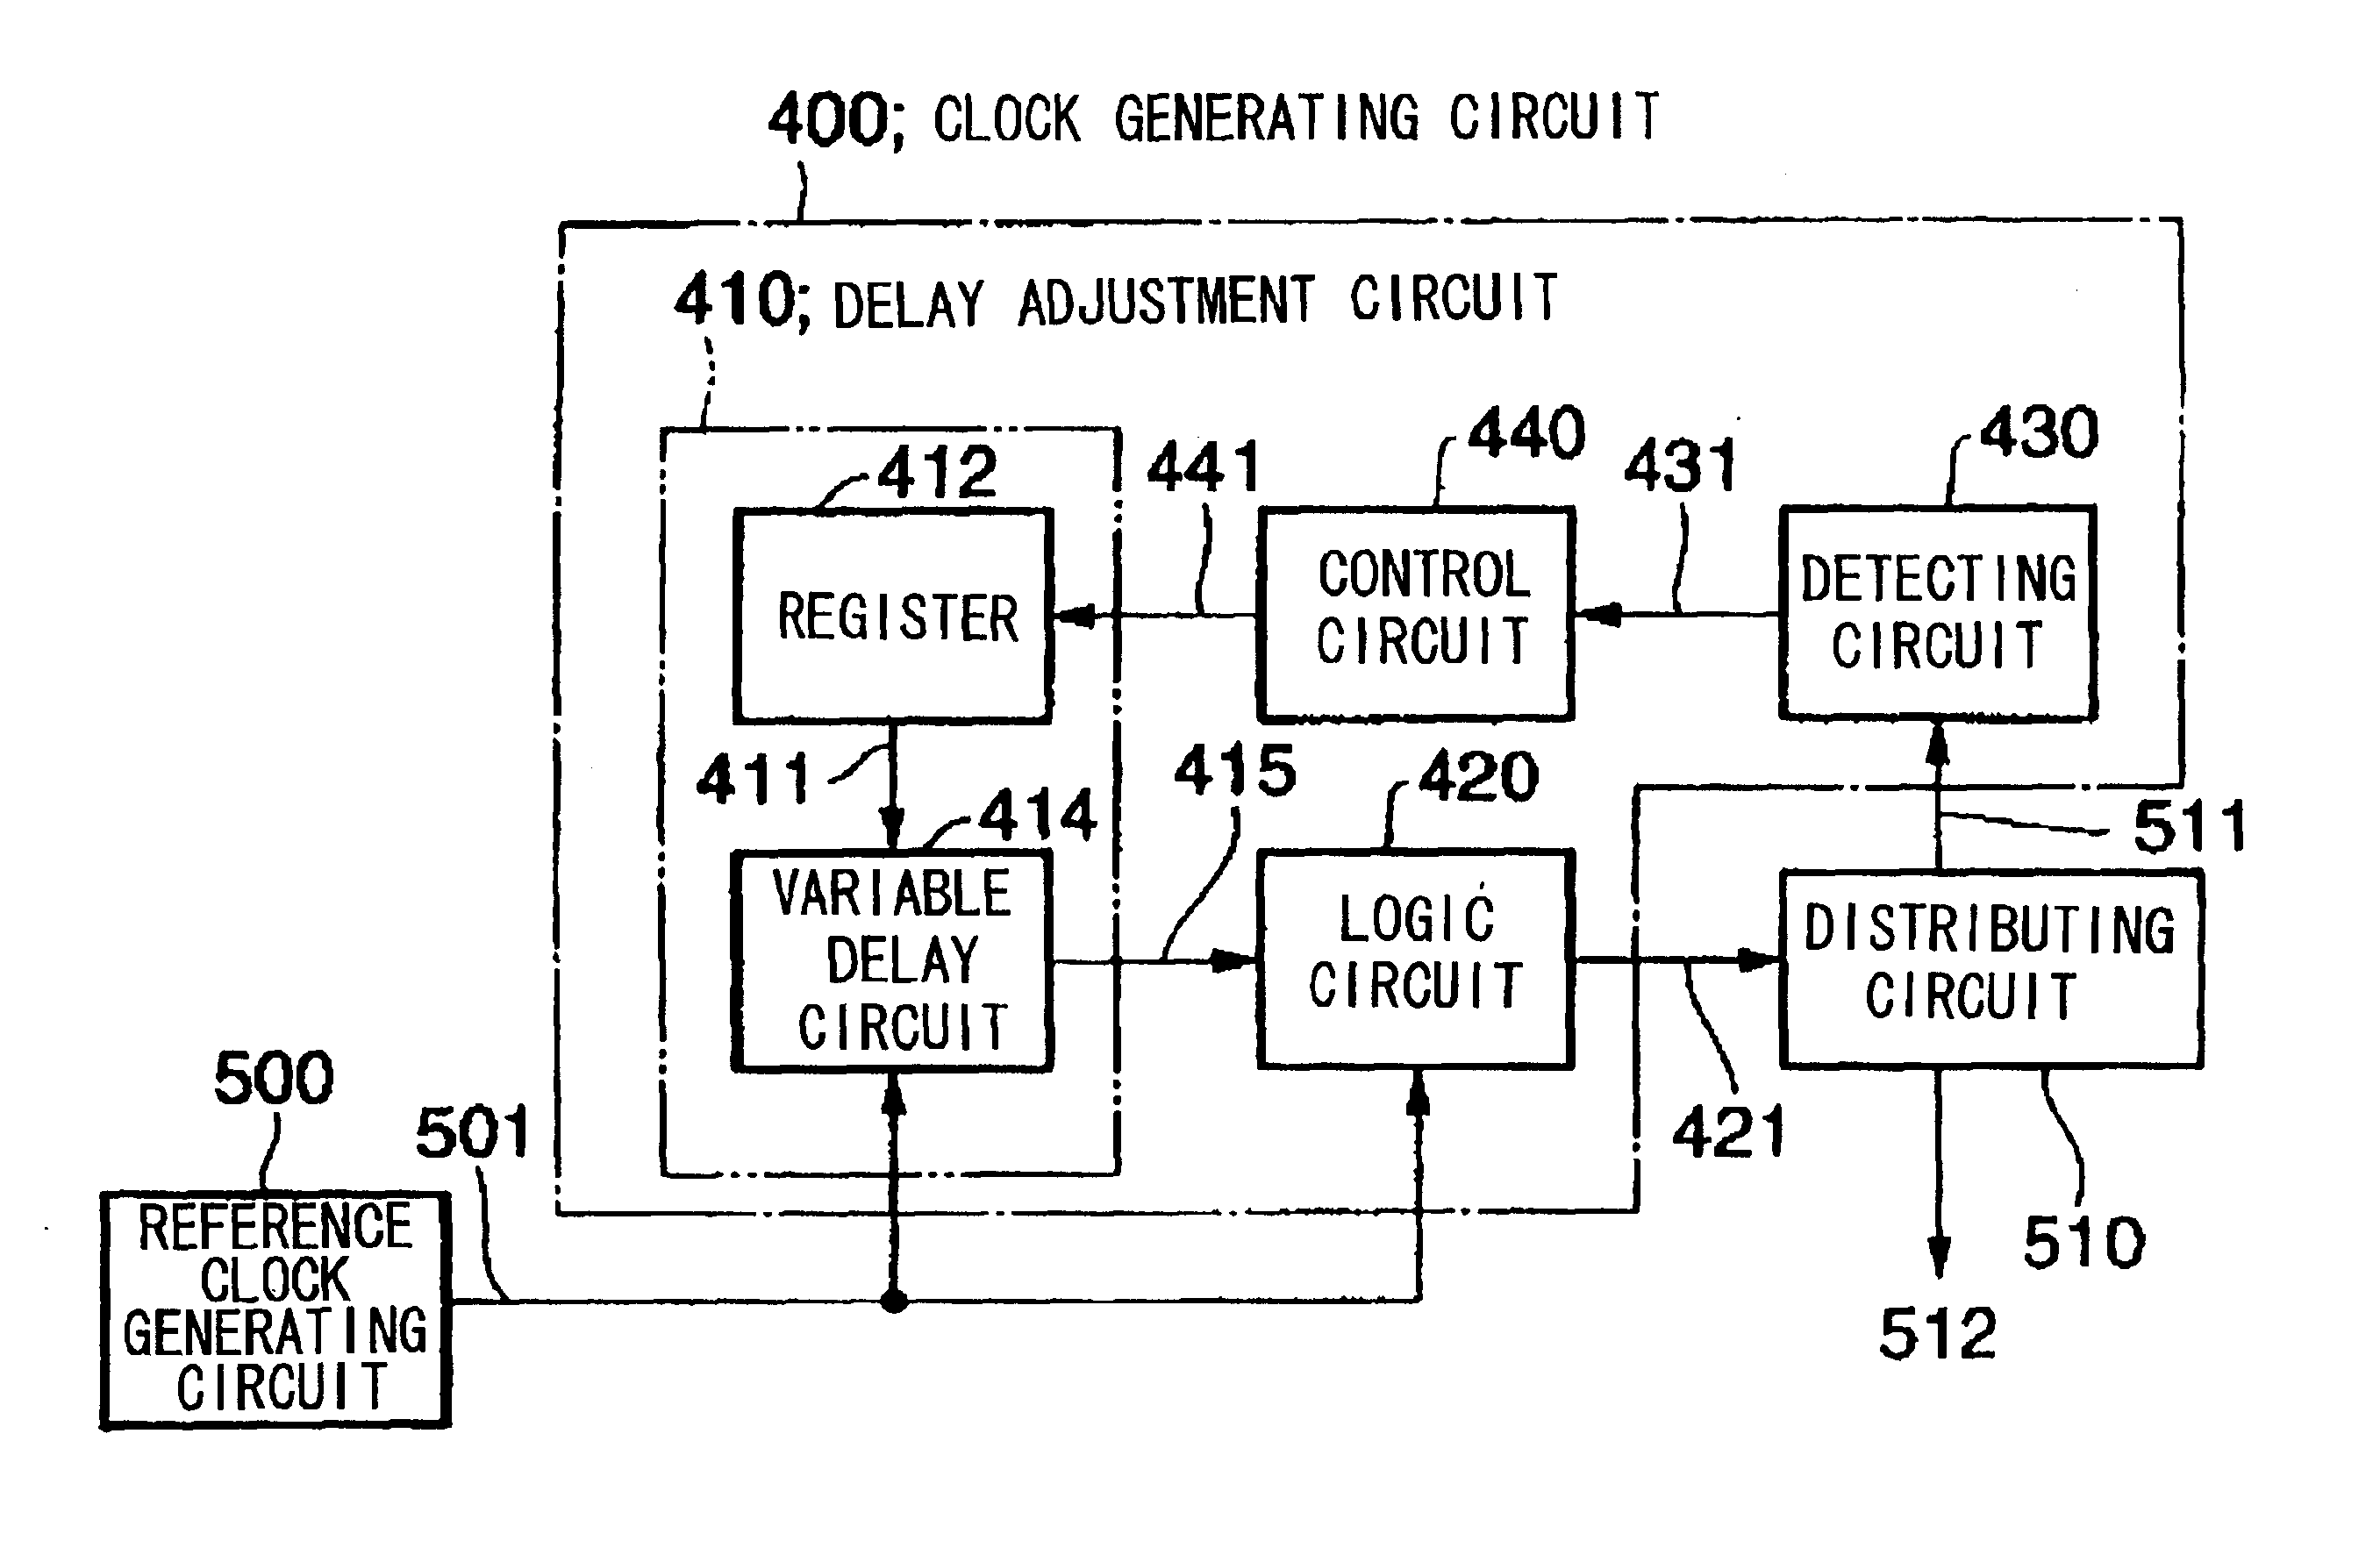 Delay adjustment circuit and a clock generating circuit using the same